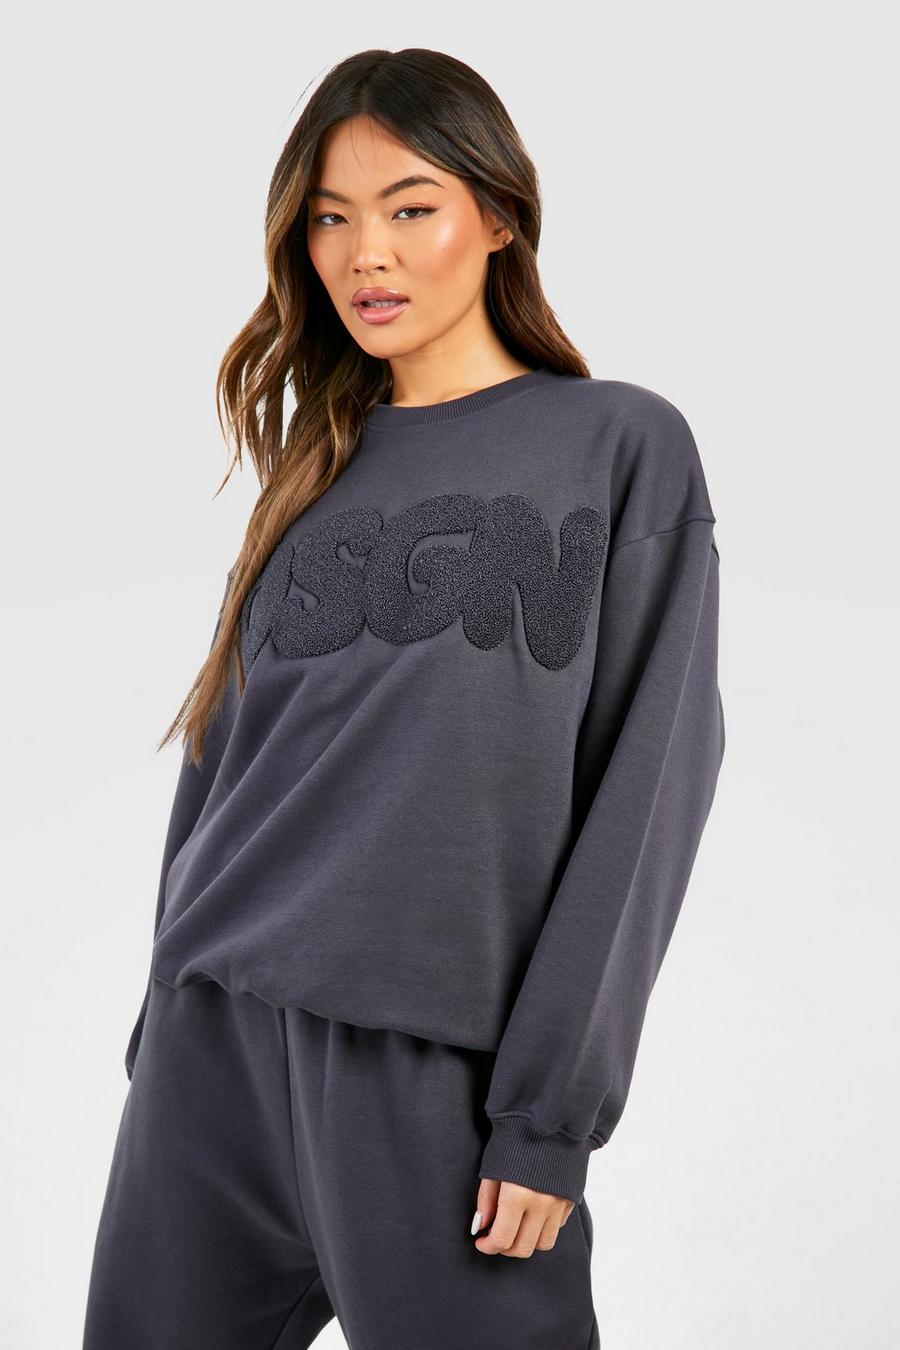 Charcoal grey Dsgn Studio Bubble Towelling Applique Oversized Sweatshirt 